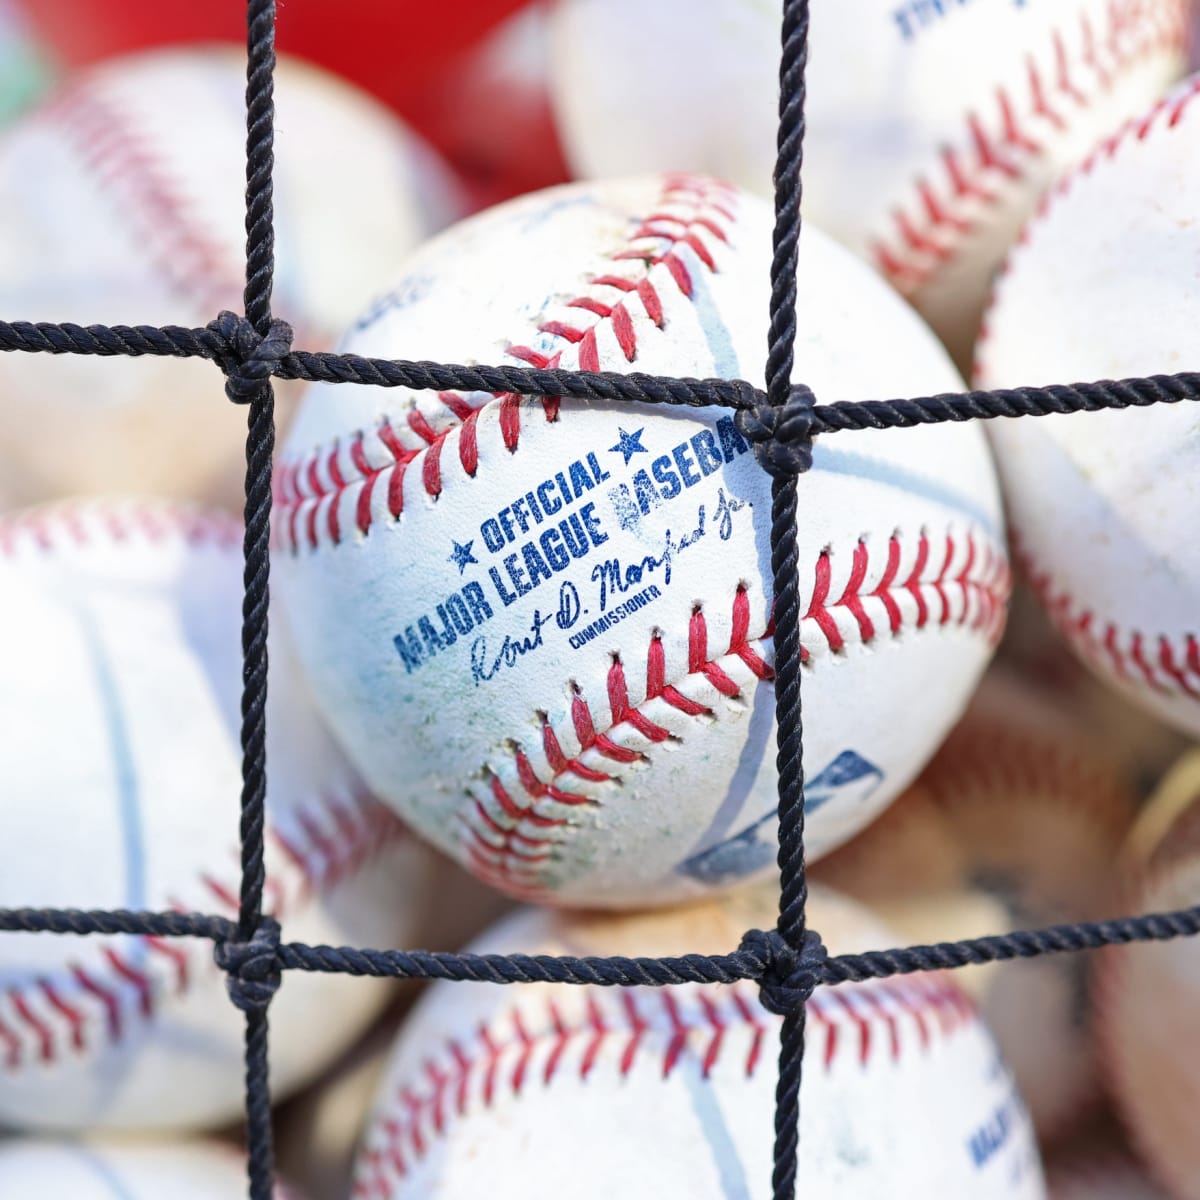 The Official Site of Major League Baseball